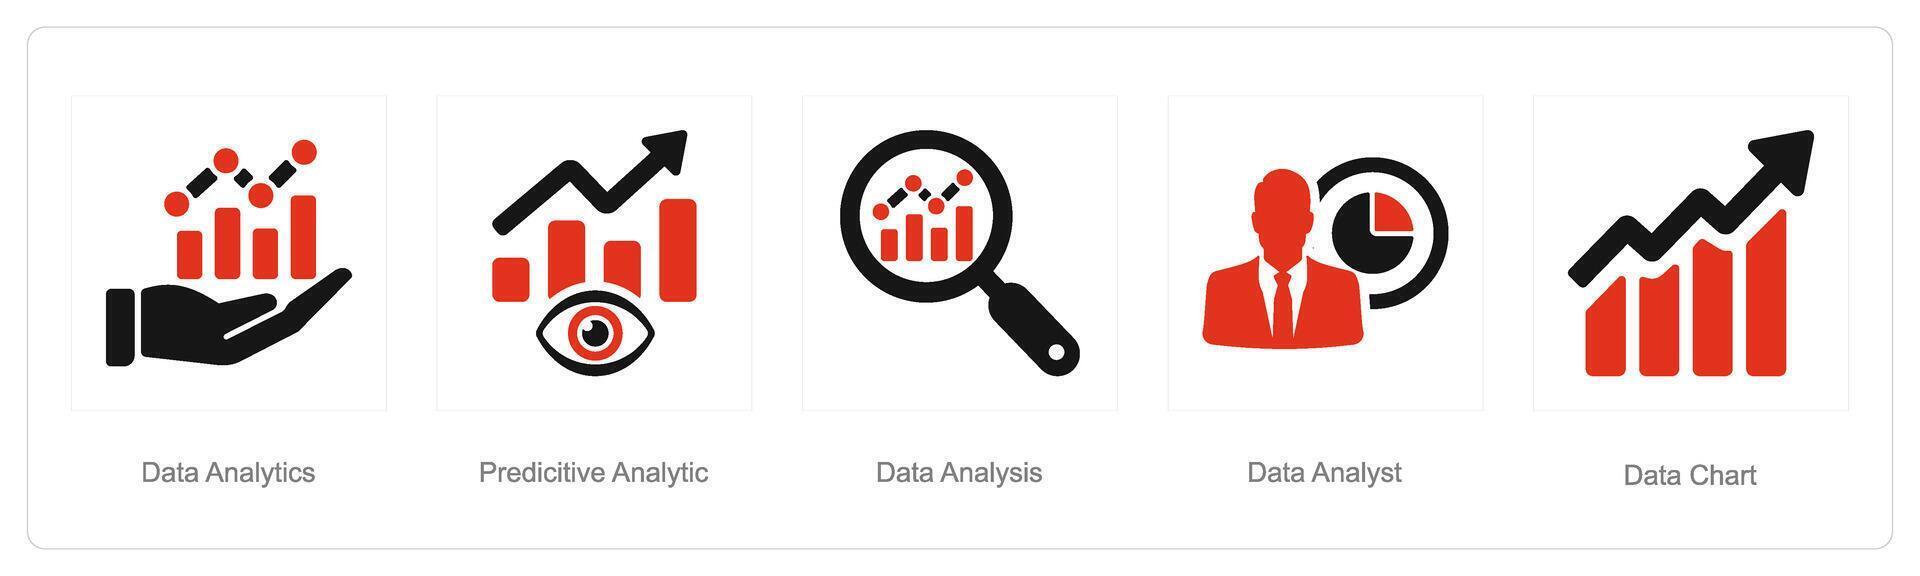 un conjunto de 5 5 datos análisis íconos como datos analítica, profético analítica, datos análisis vector